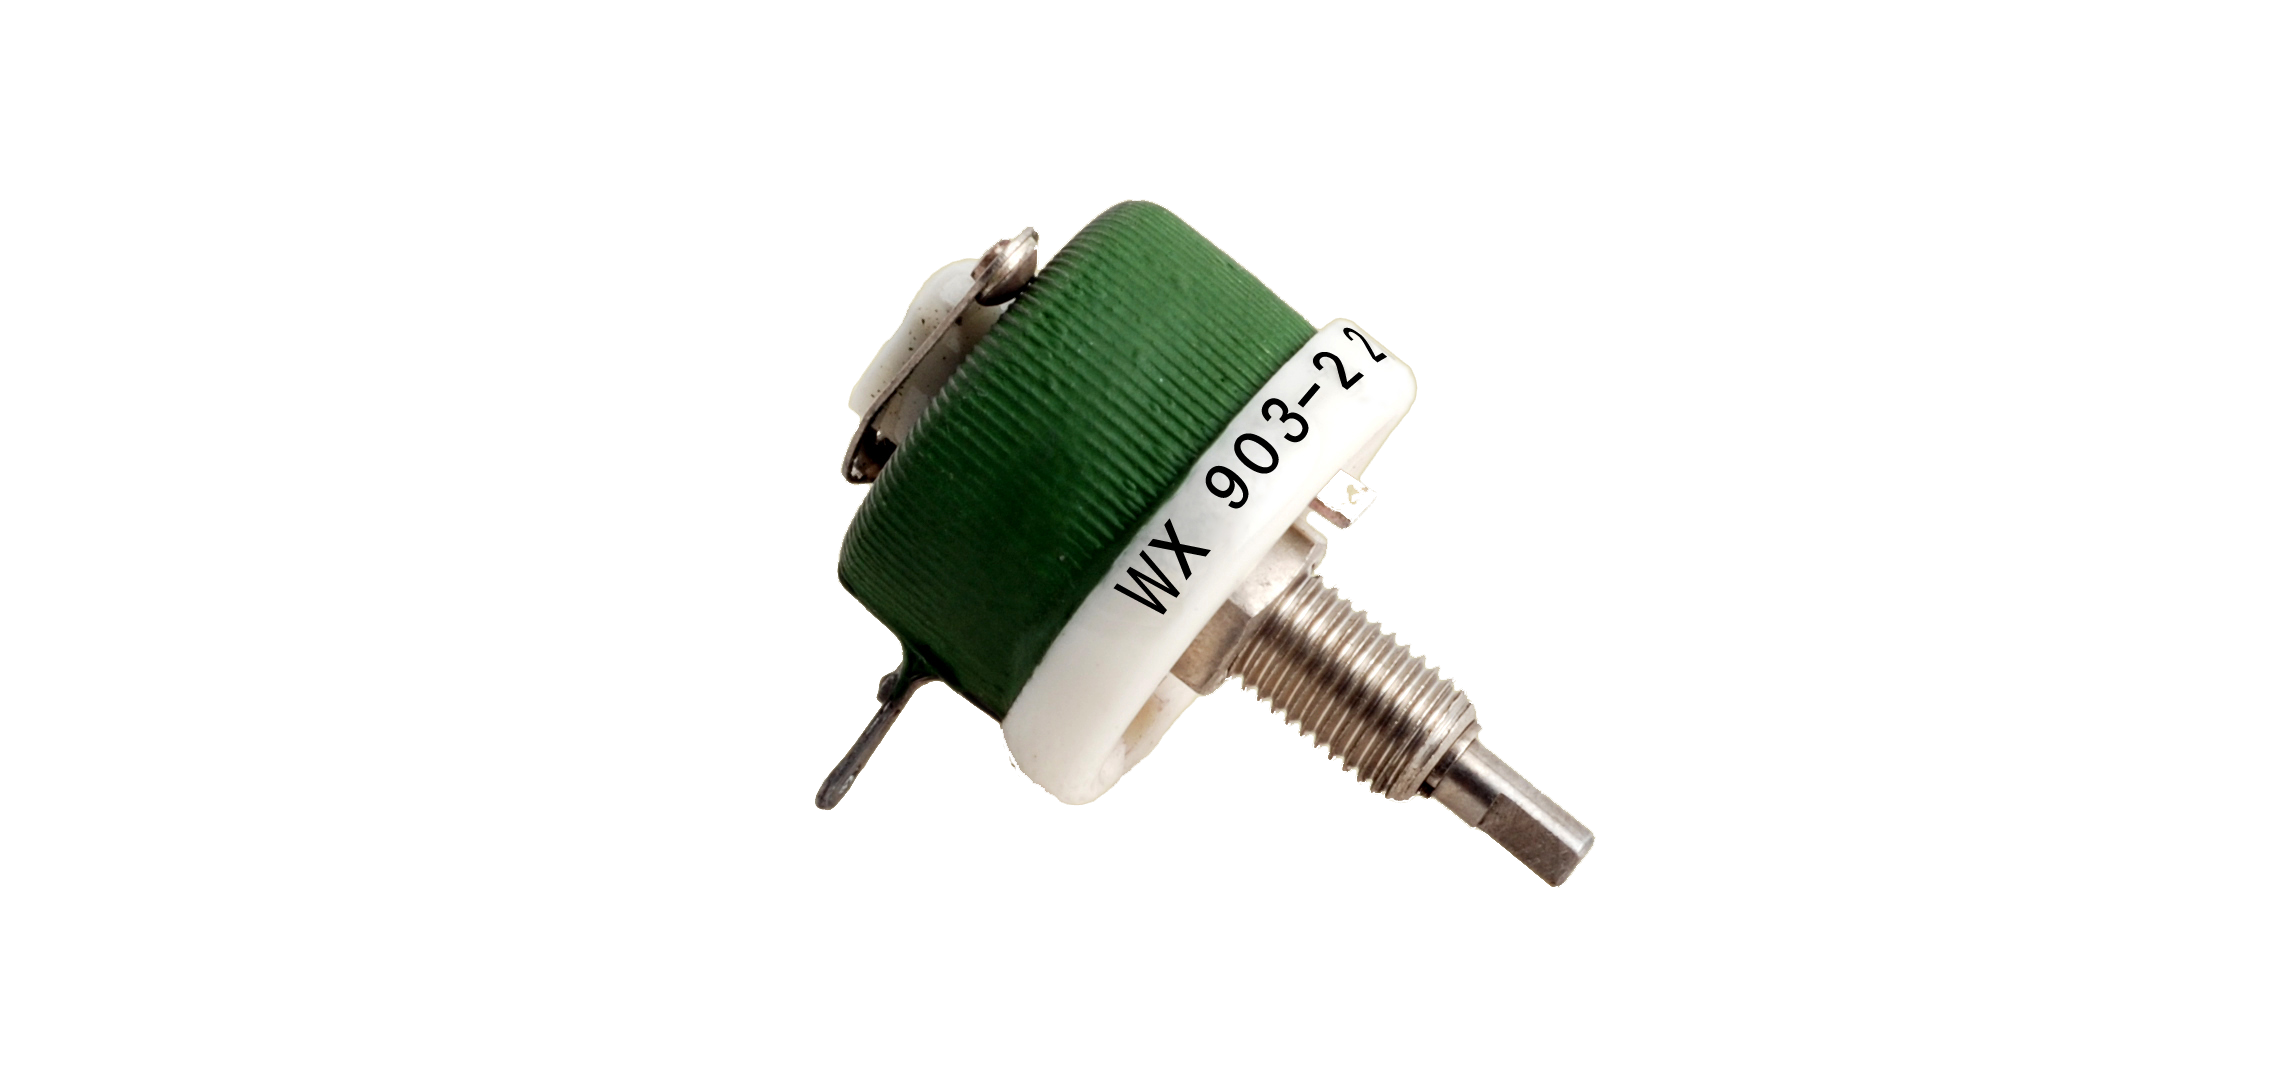 WX903 wire wound potentiometer